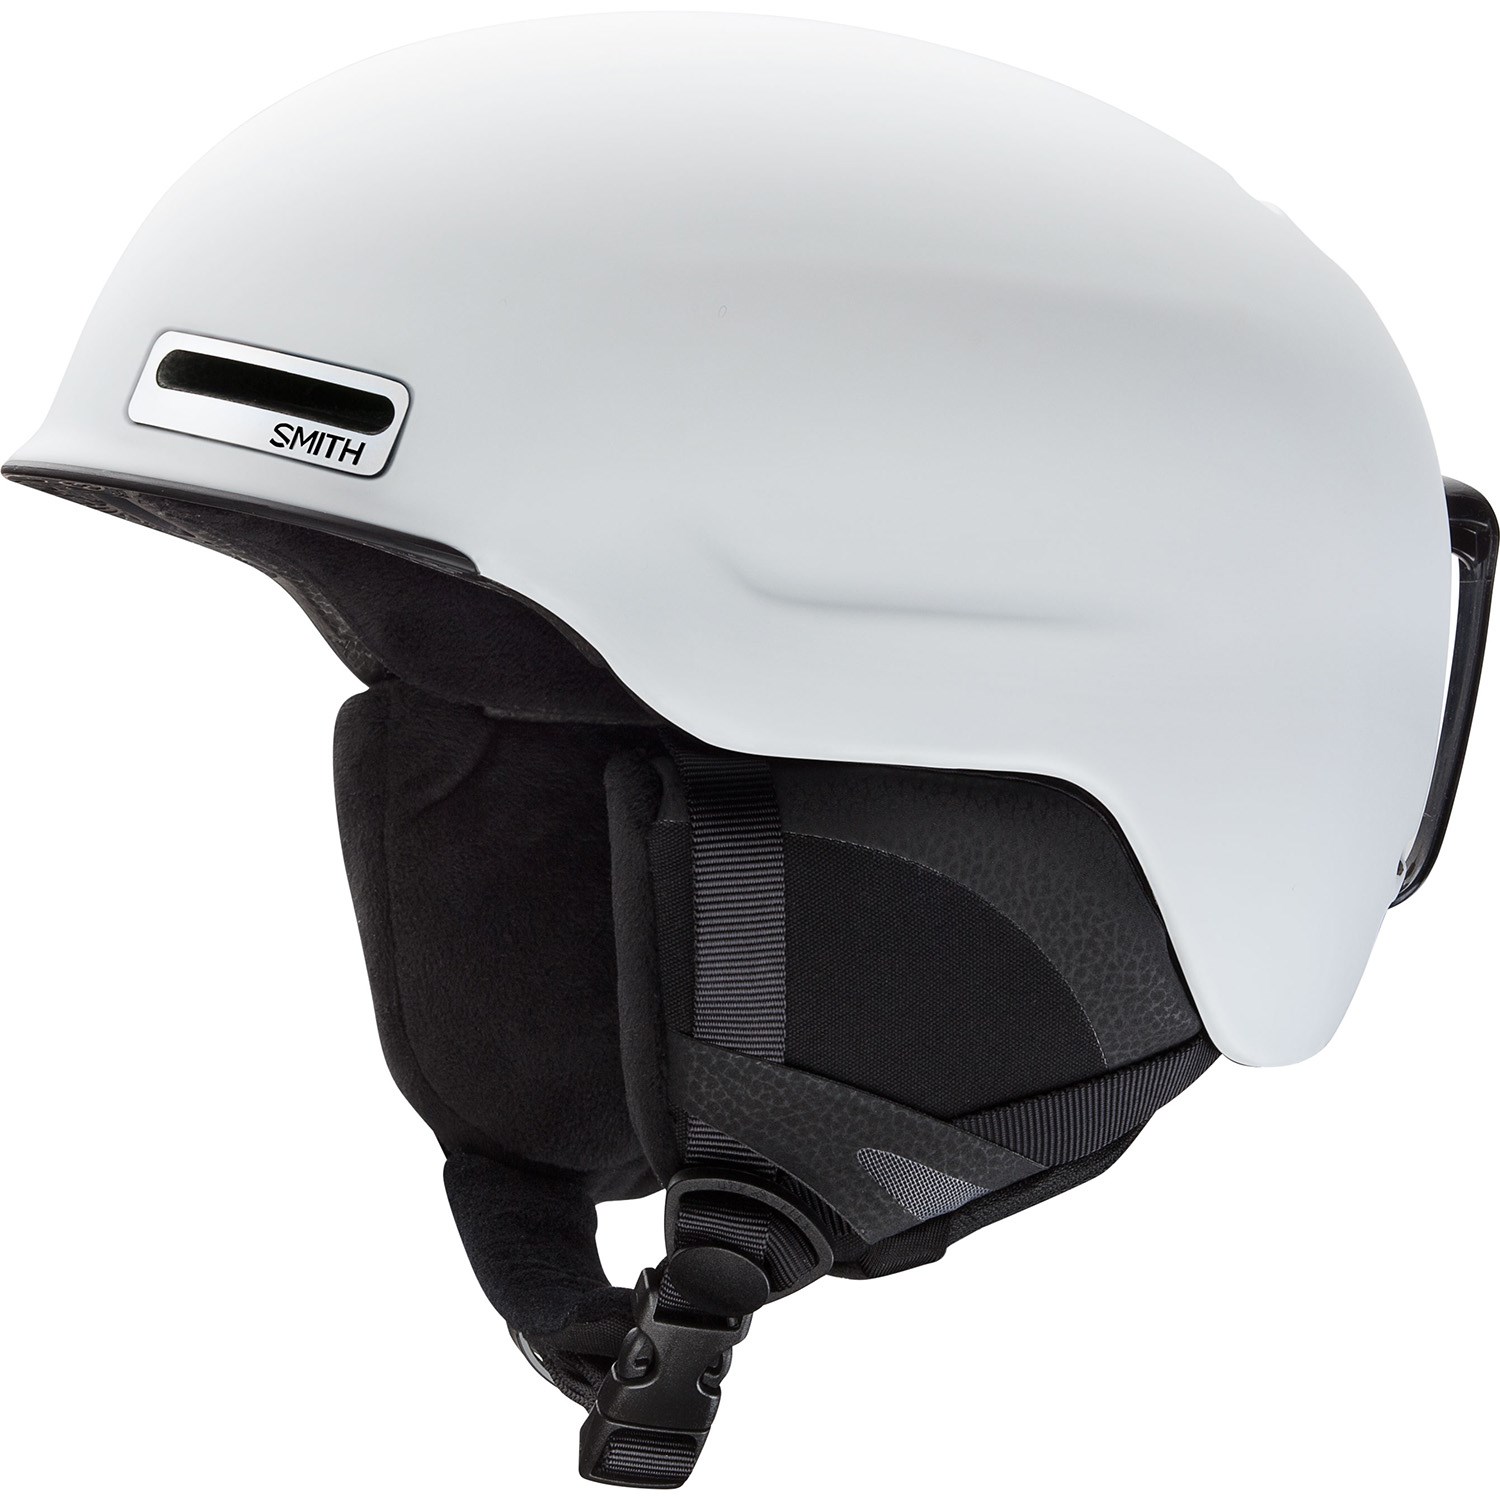 Smith Maze Helmet.jpg